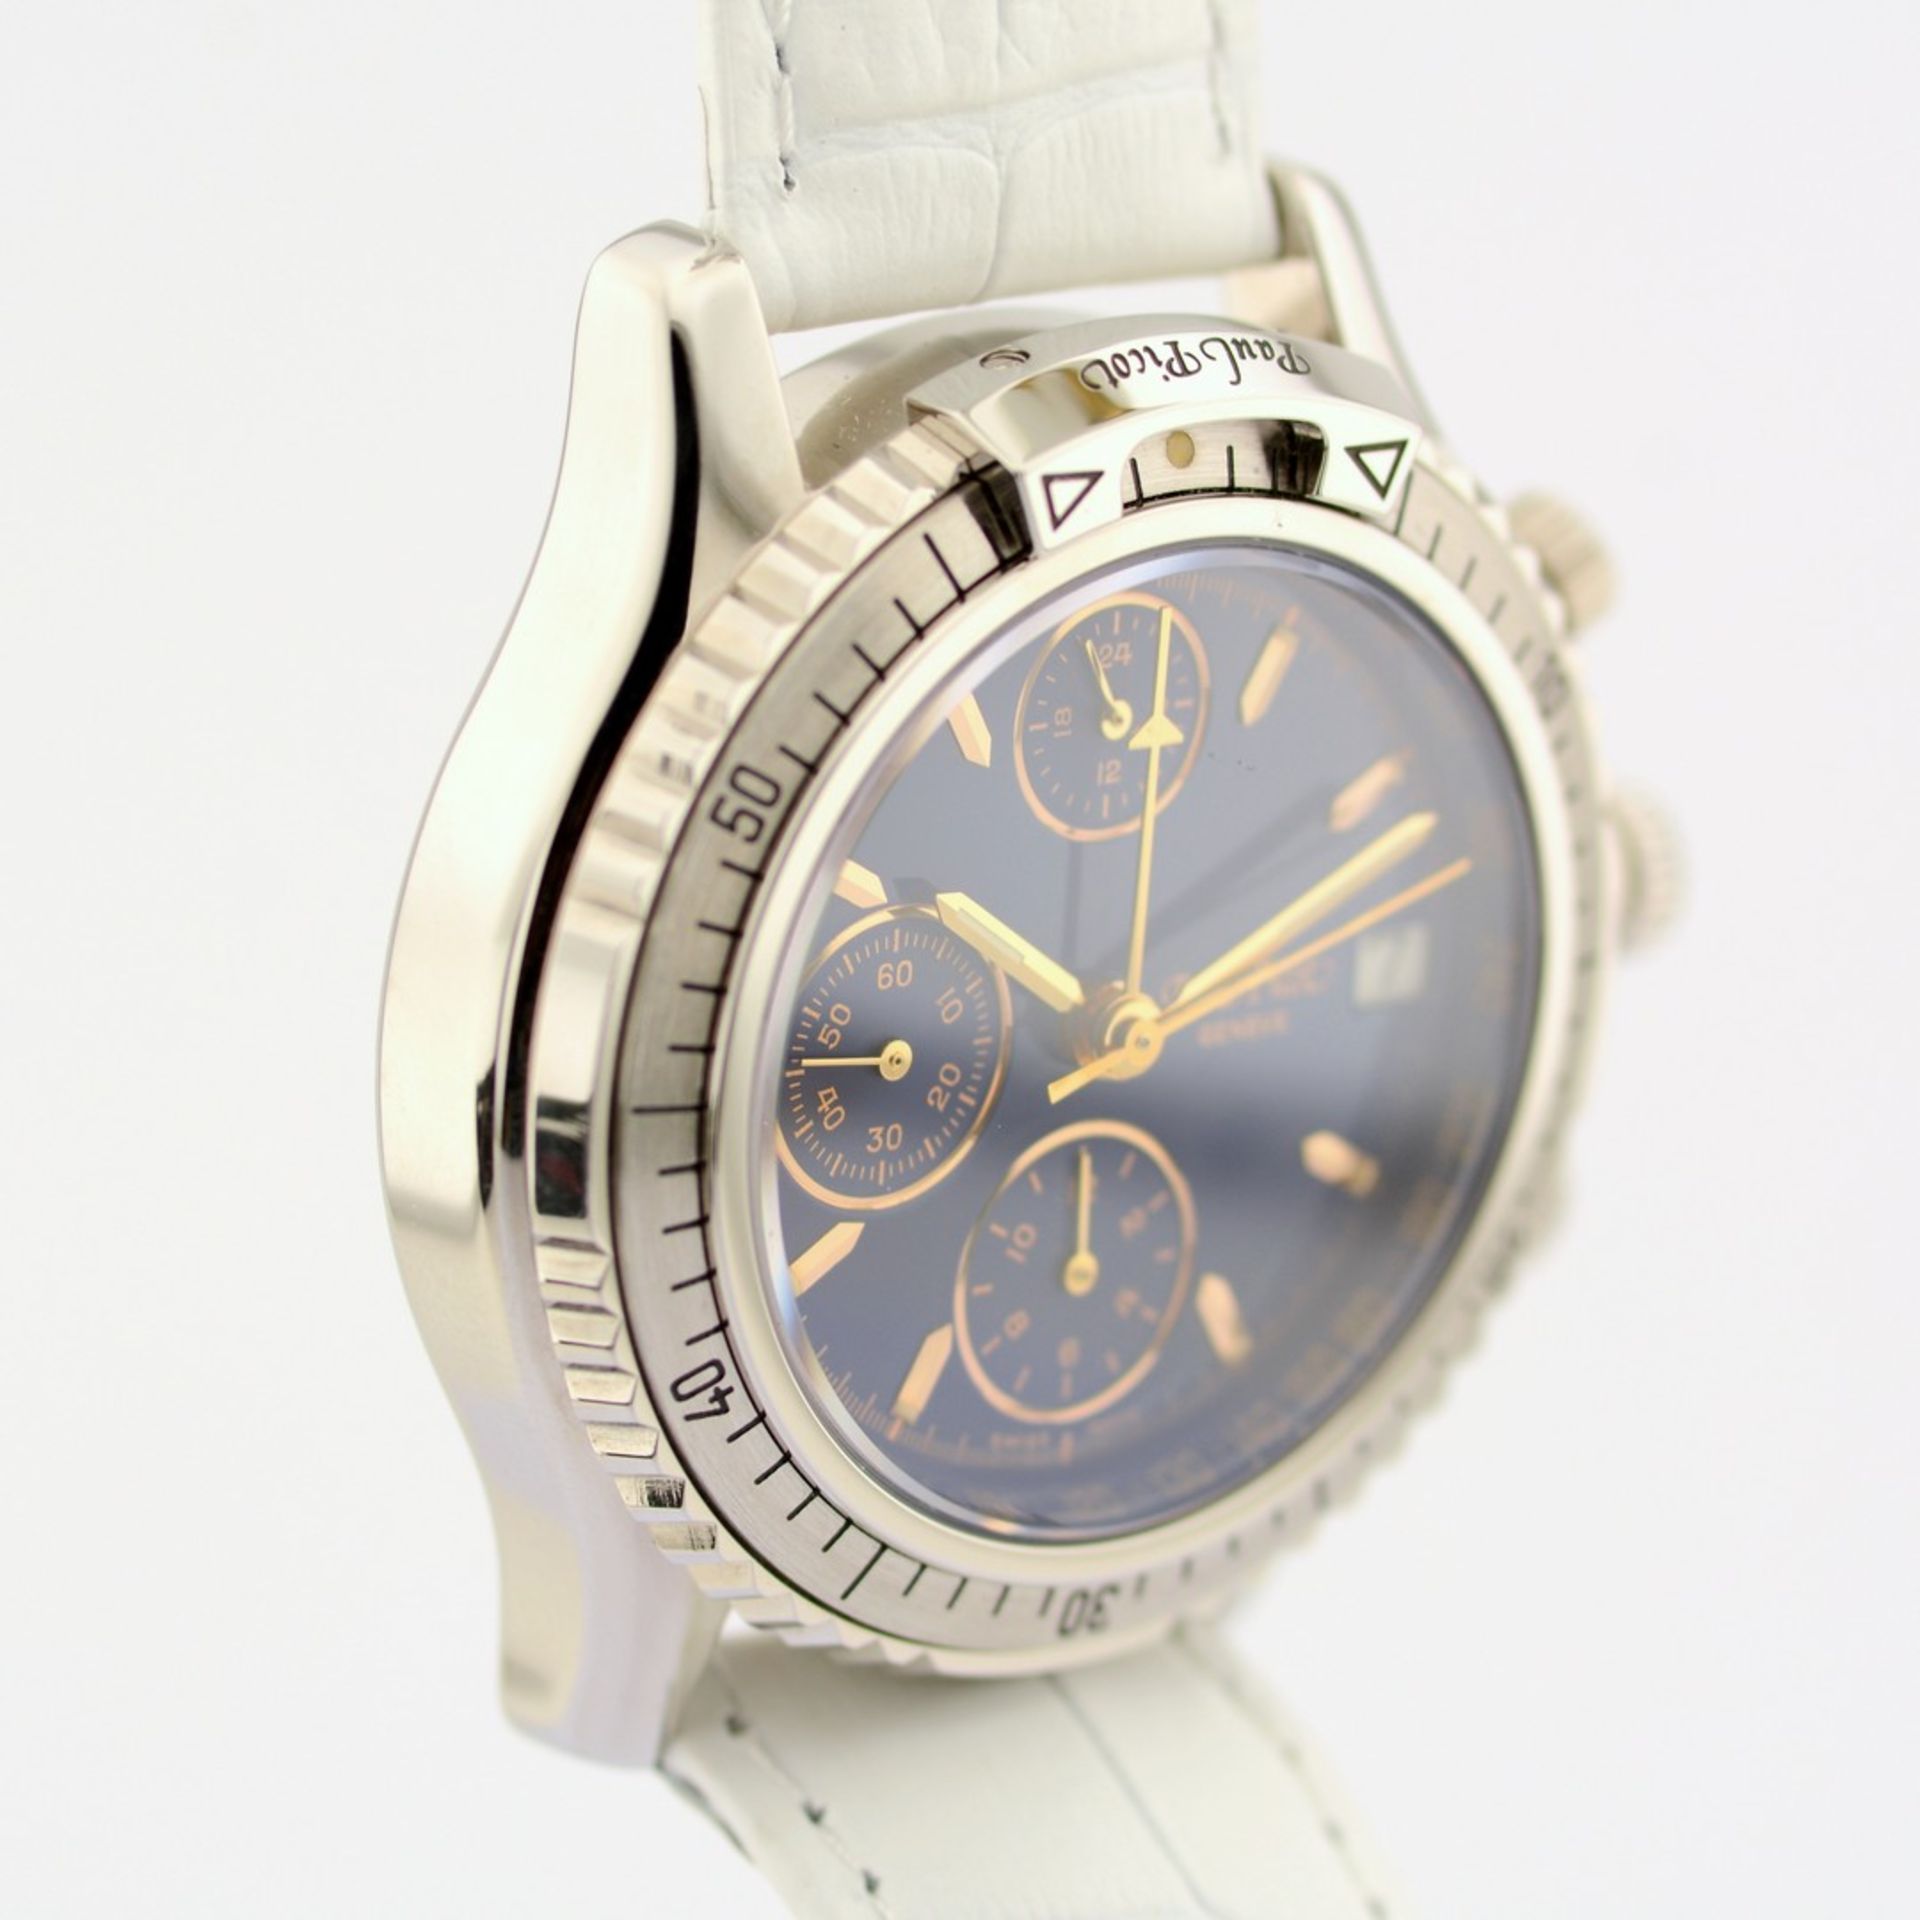 Paul Picot / U-Boot Chronograph - Gentlemen's Steel Wristwatch - Image 9 of 10